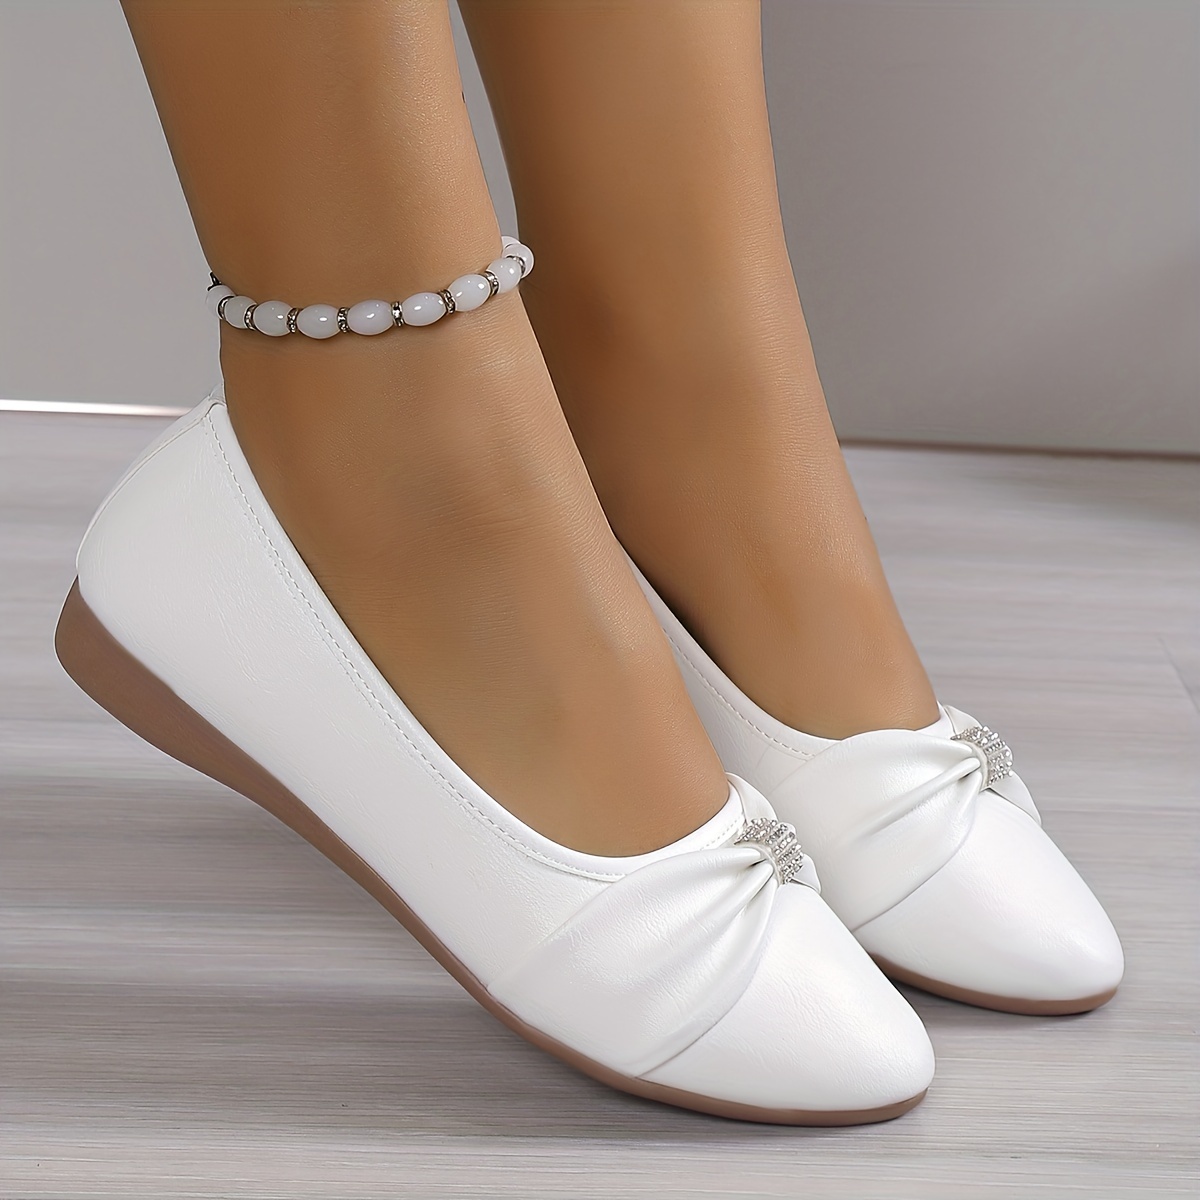 

Women's Bowknot Flat Shoes, Rhinestone Decor Pointed Toe Soft Sole Shoes, Versatile Slip On Ballet Flats